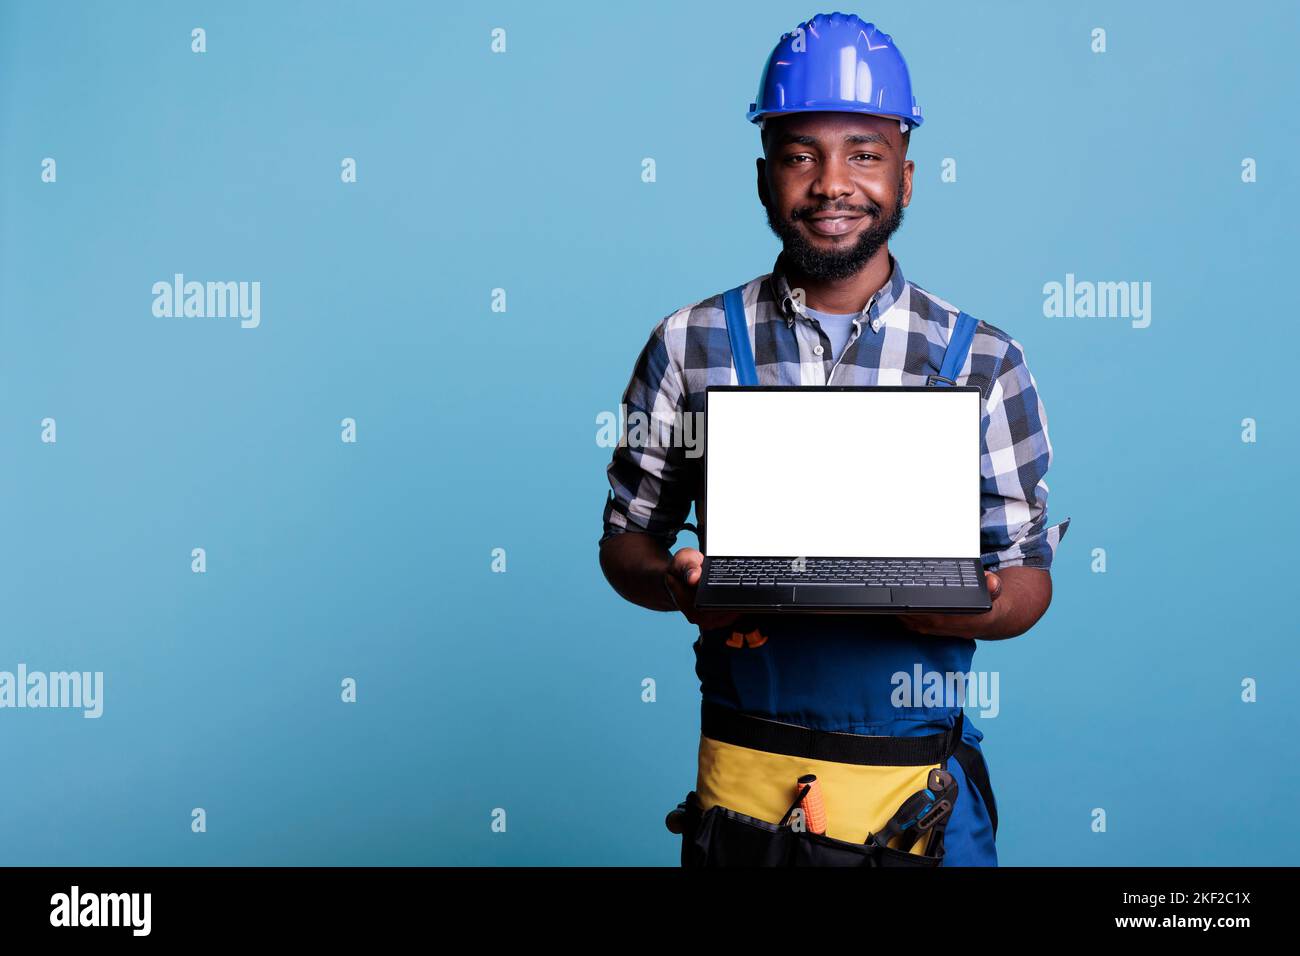 Bauarbeiter im Blaumann hält Daumen hoch Stock-Foto